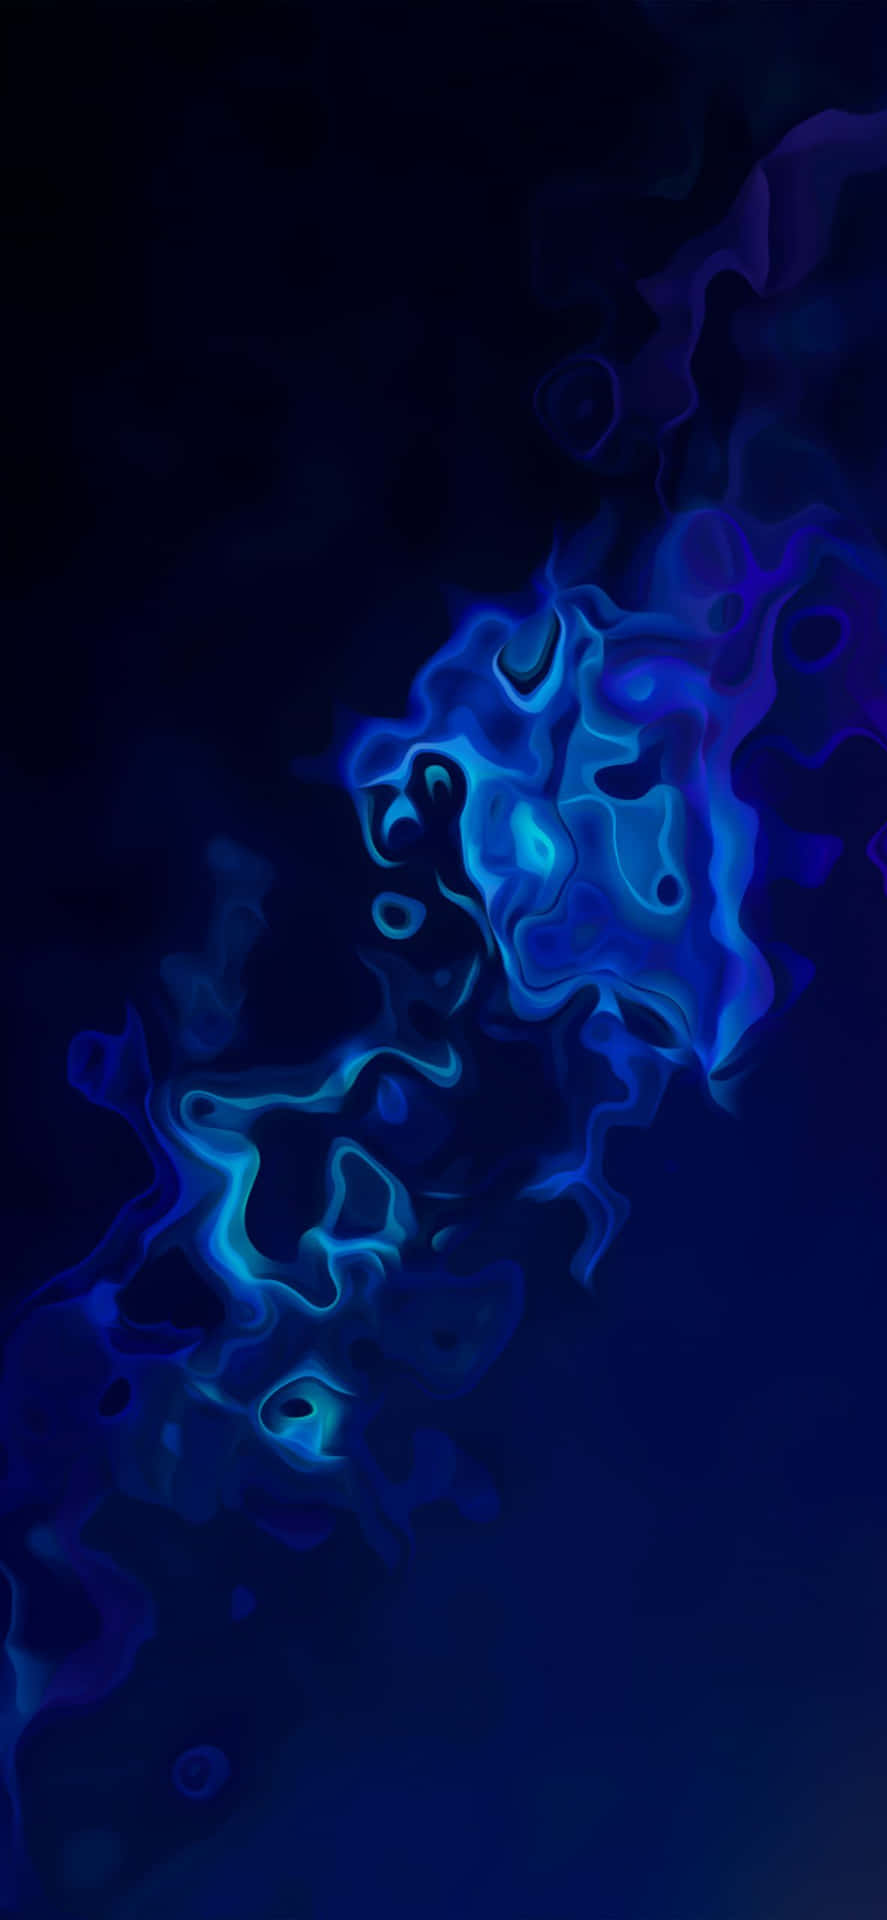 Electric Blue Fluid Art Aesthetic.jpg Wallpaper